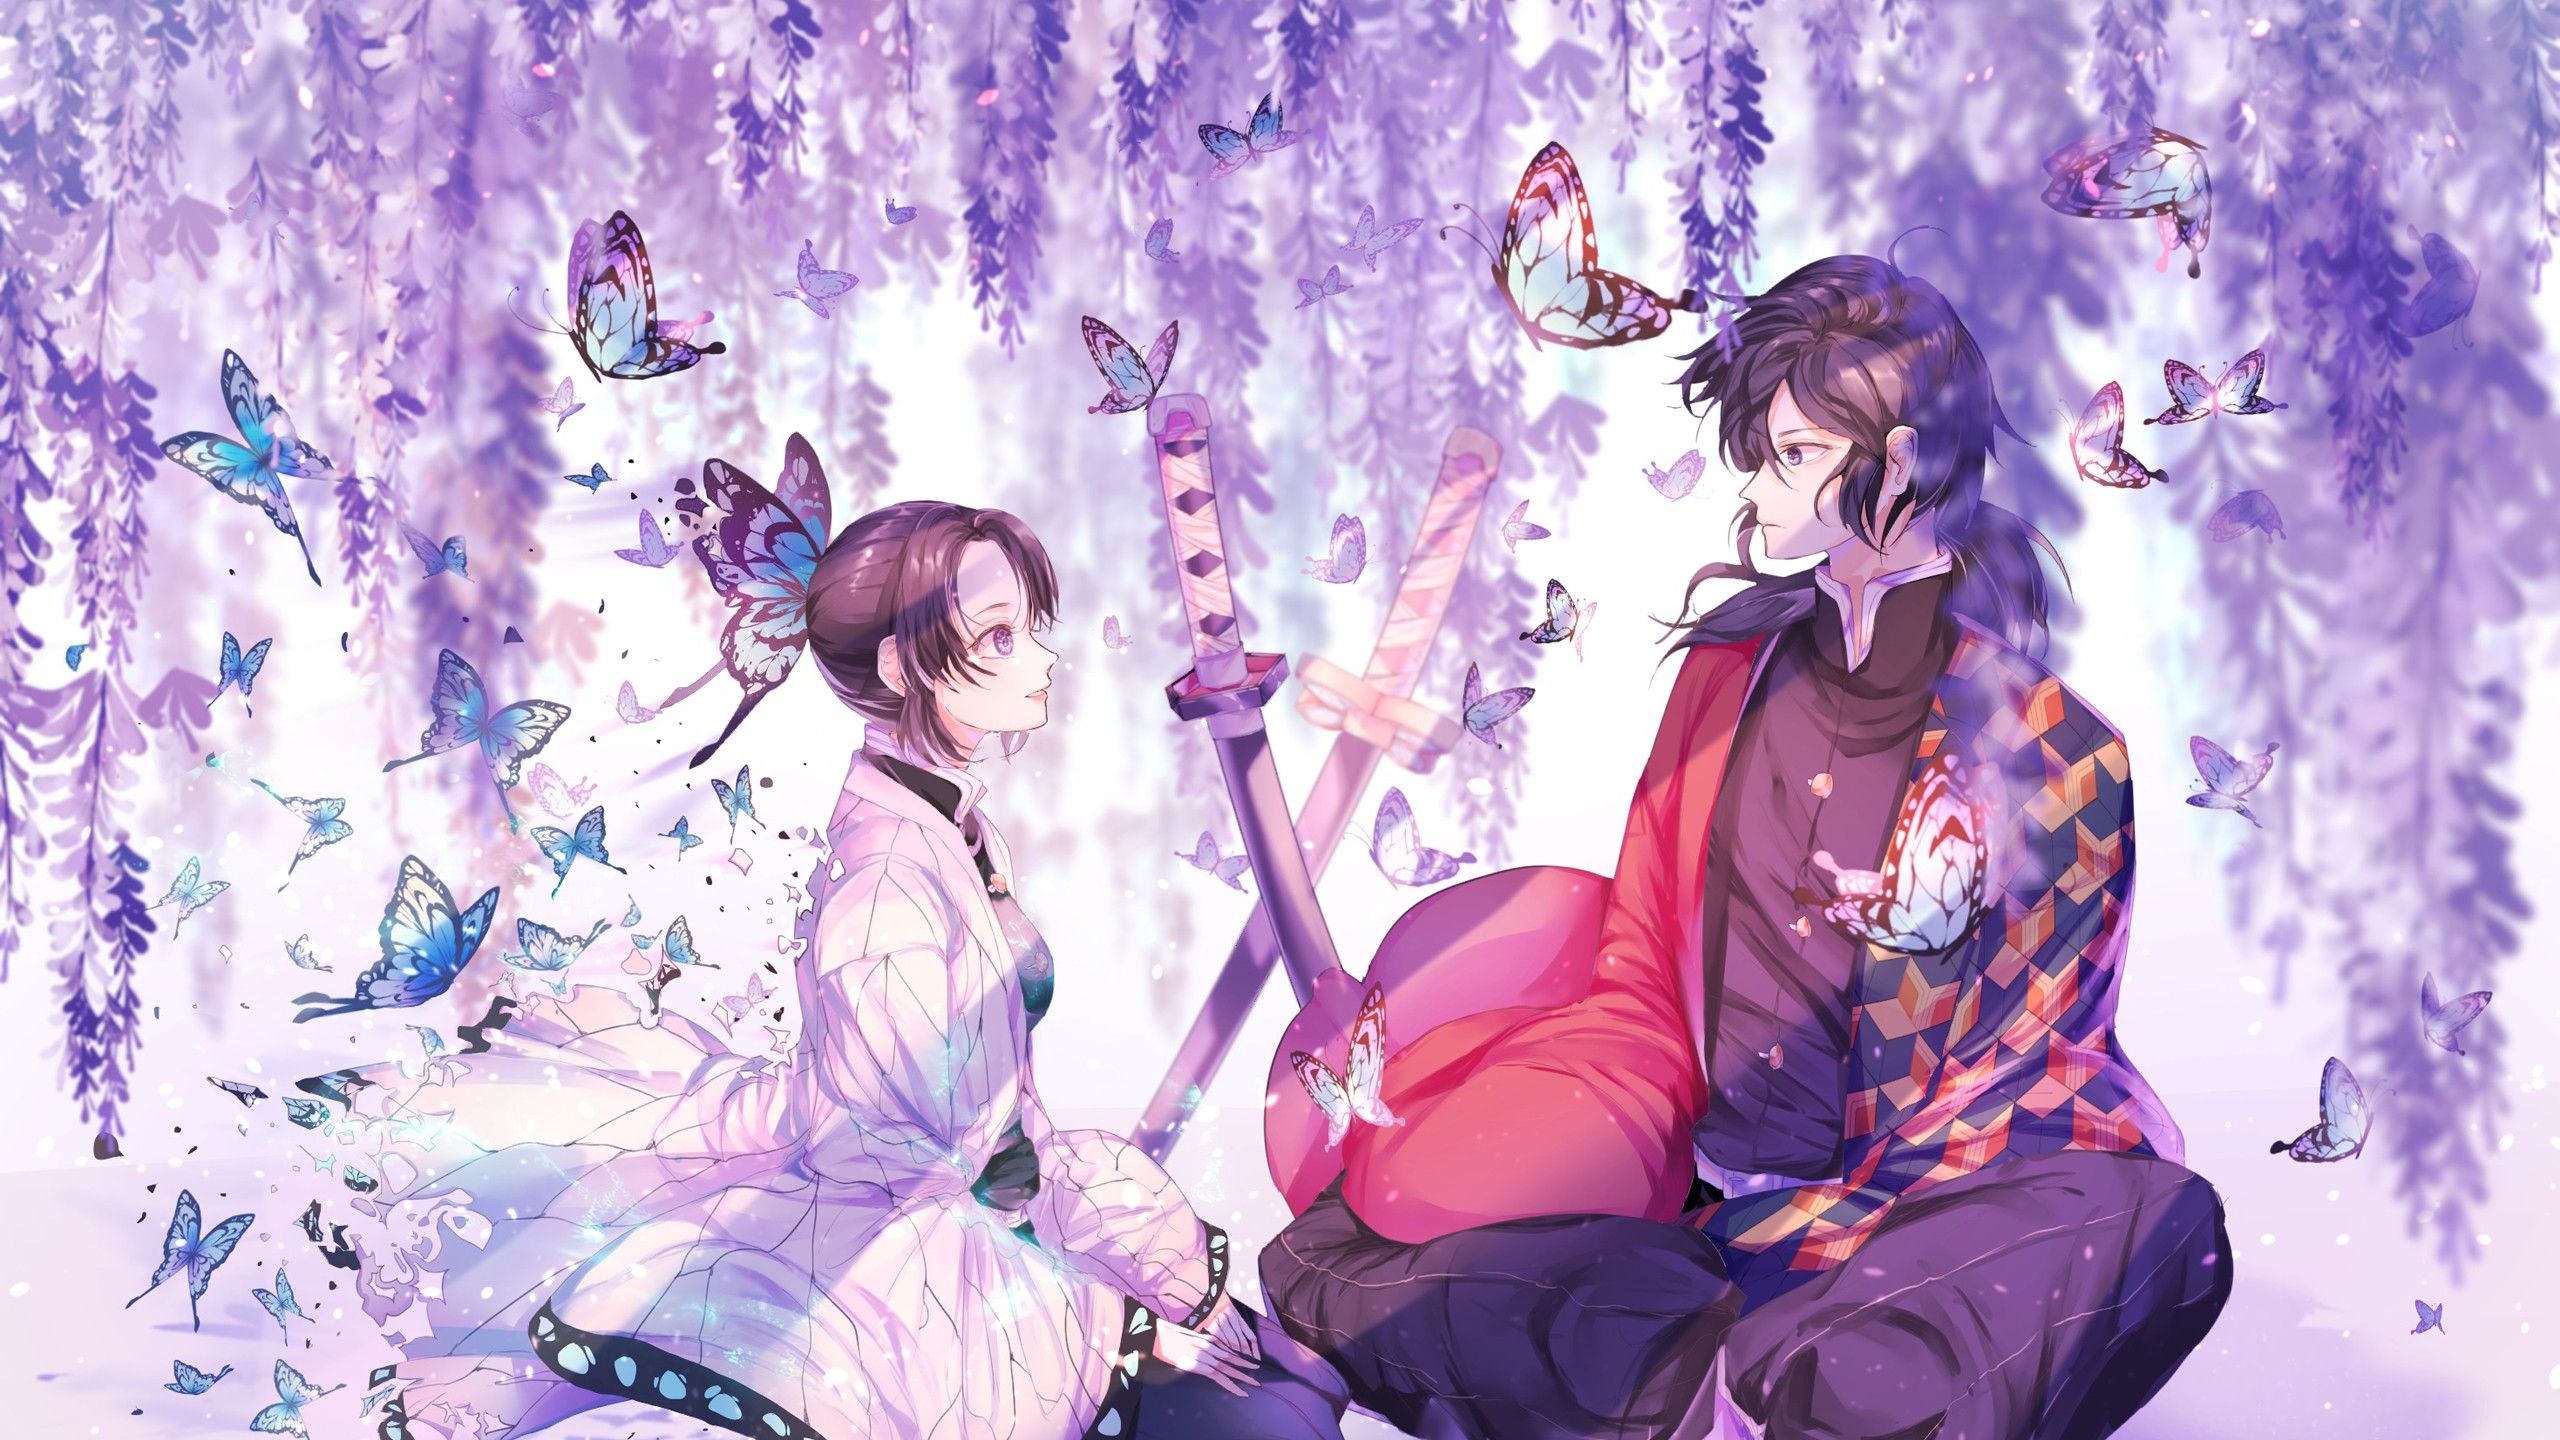 Demon Slayer Giyuu Tomioka Shinobu Kochou Sitting Near Swords Flying Butterflies Under Purple Flowers HD Anime Wallpaper</a> Wallpaper